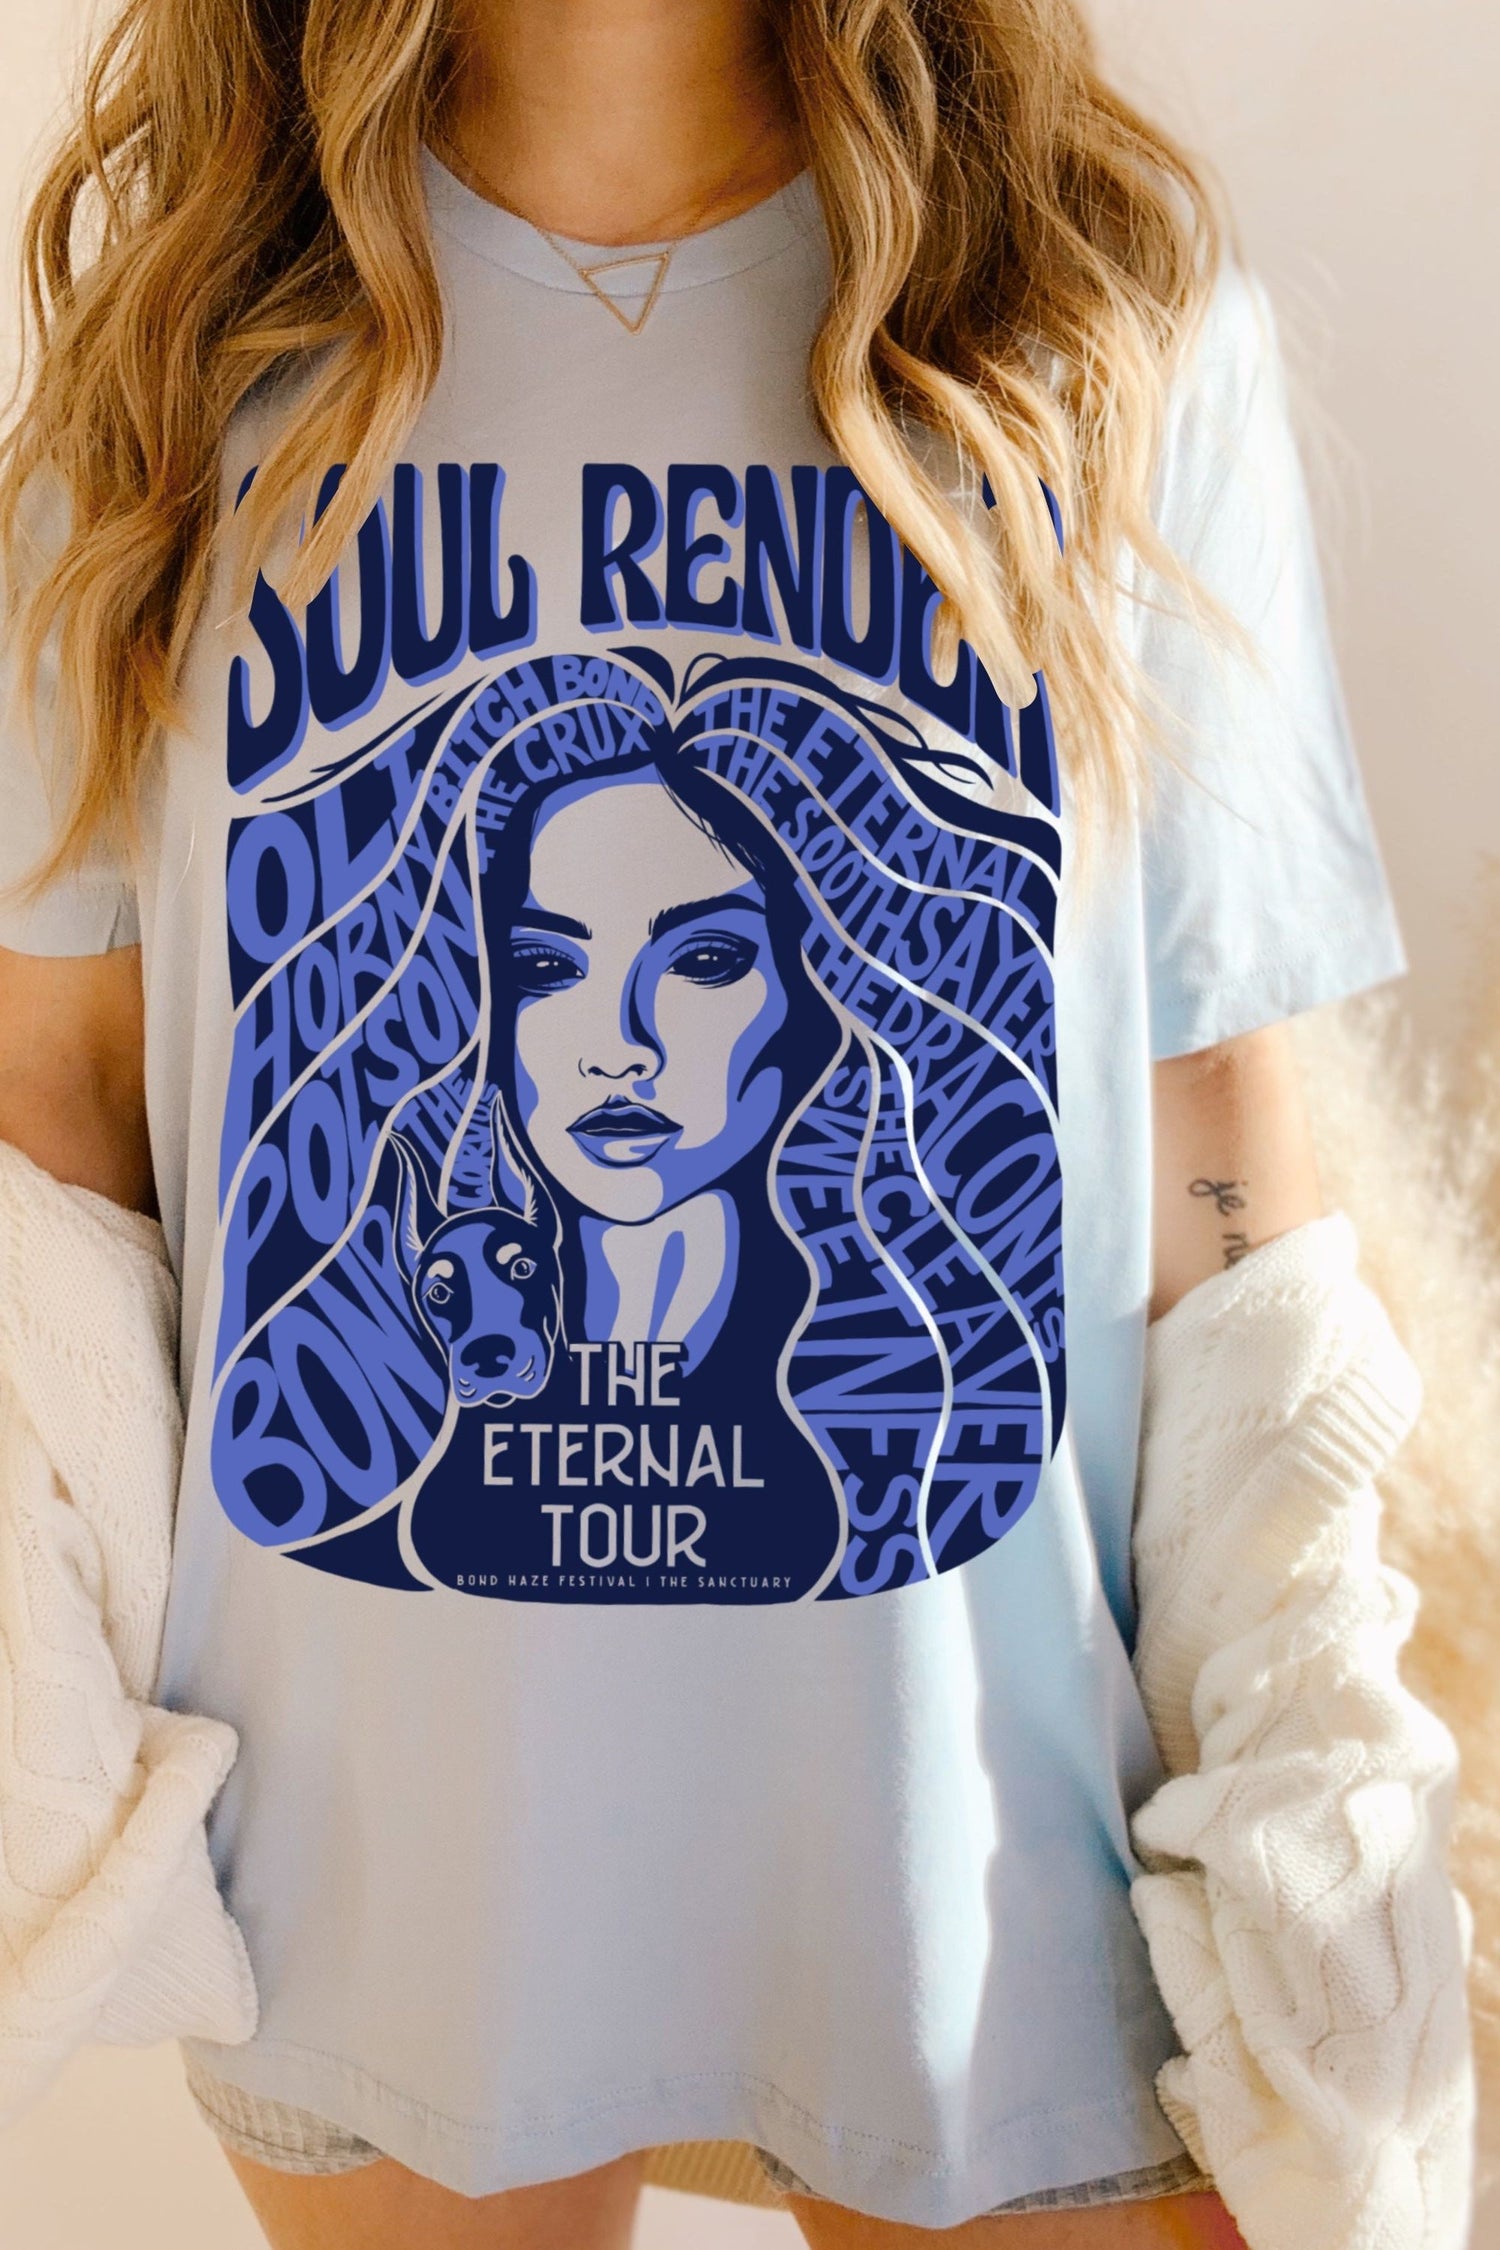 Soul Render T - Shirt - Caffeineandcurses - J Bree